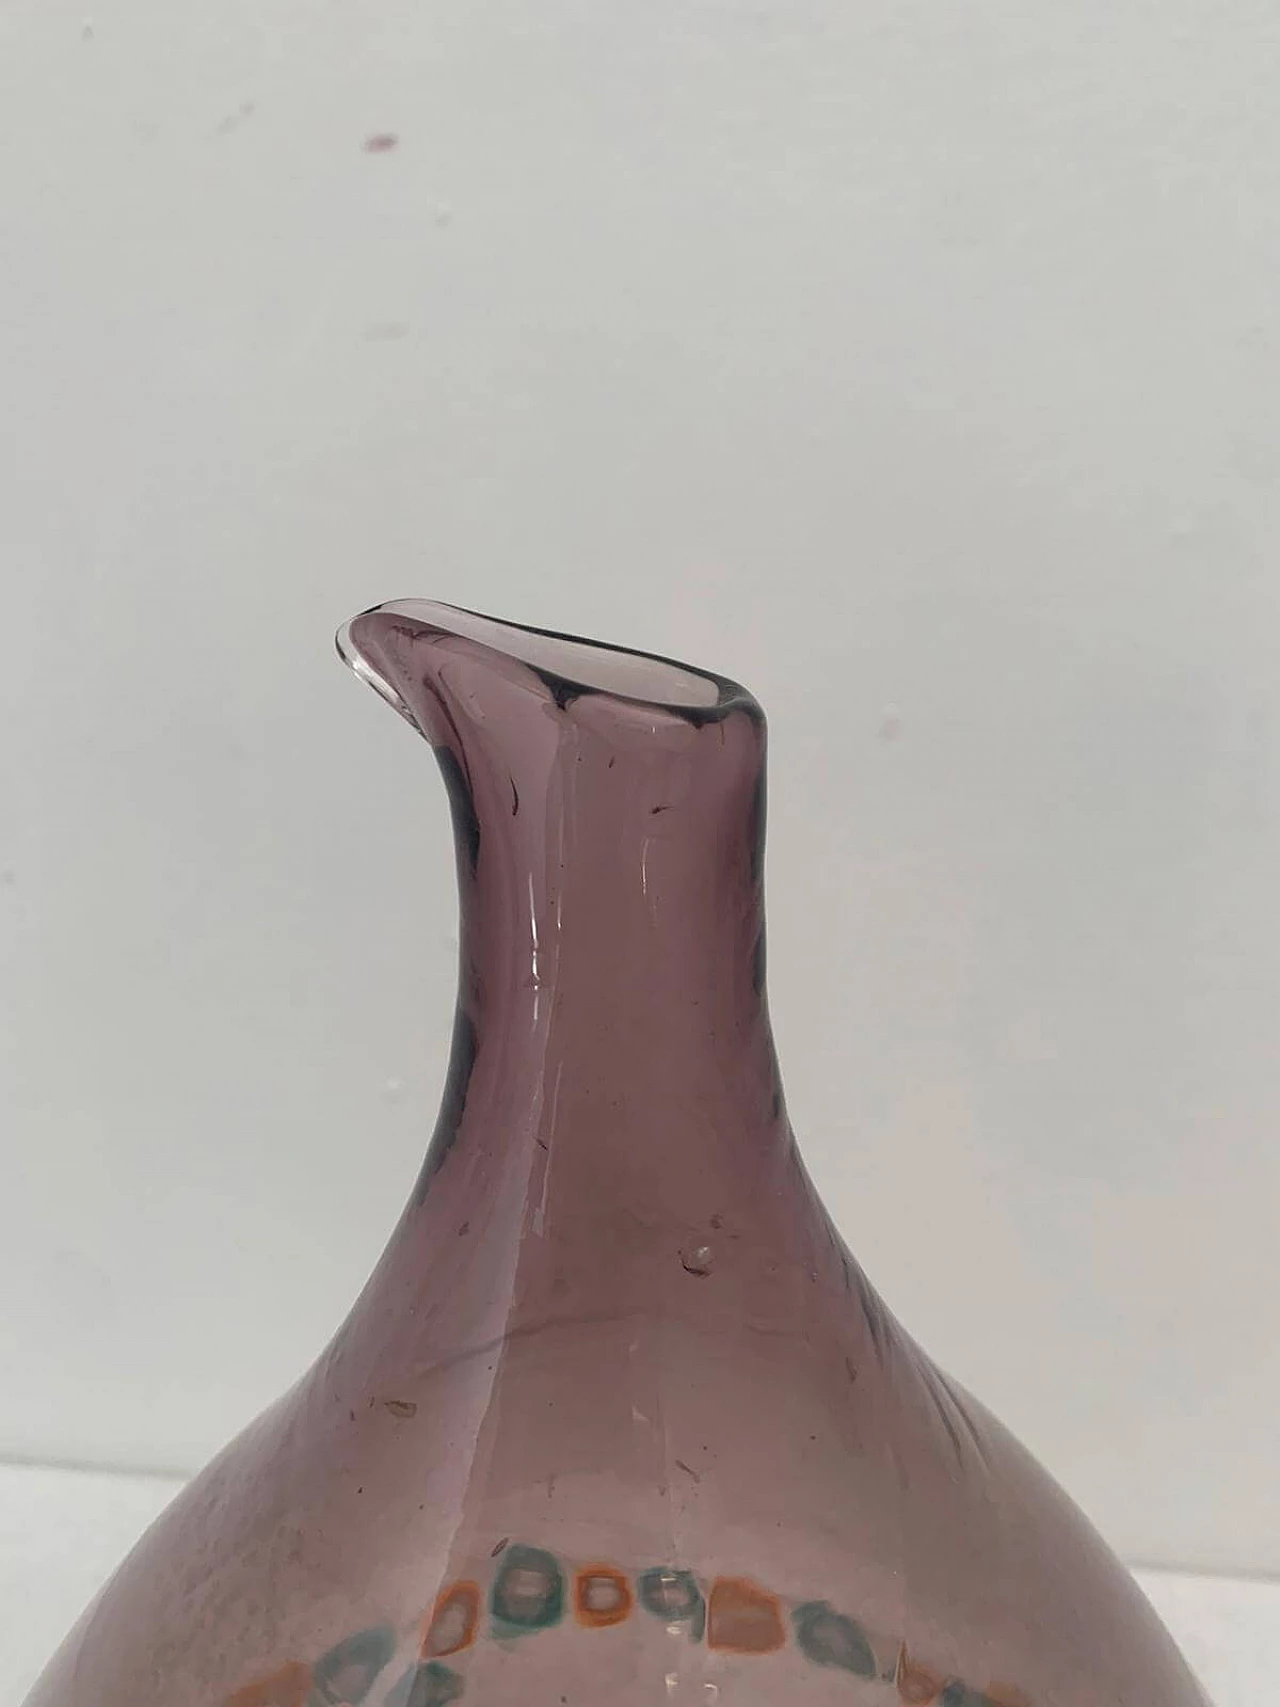 Eggplant-colored truncated cone vase in Murano glass for Vistosi, 1970s 2